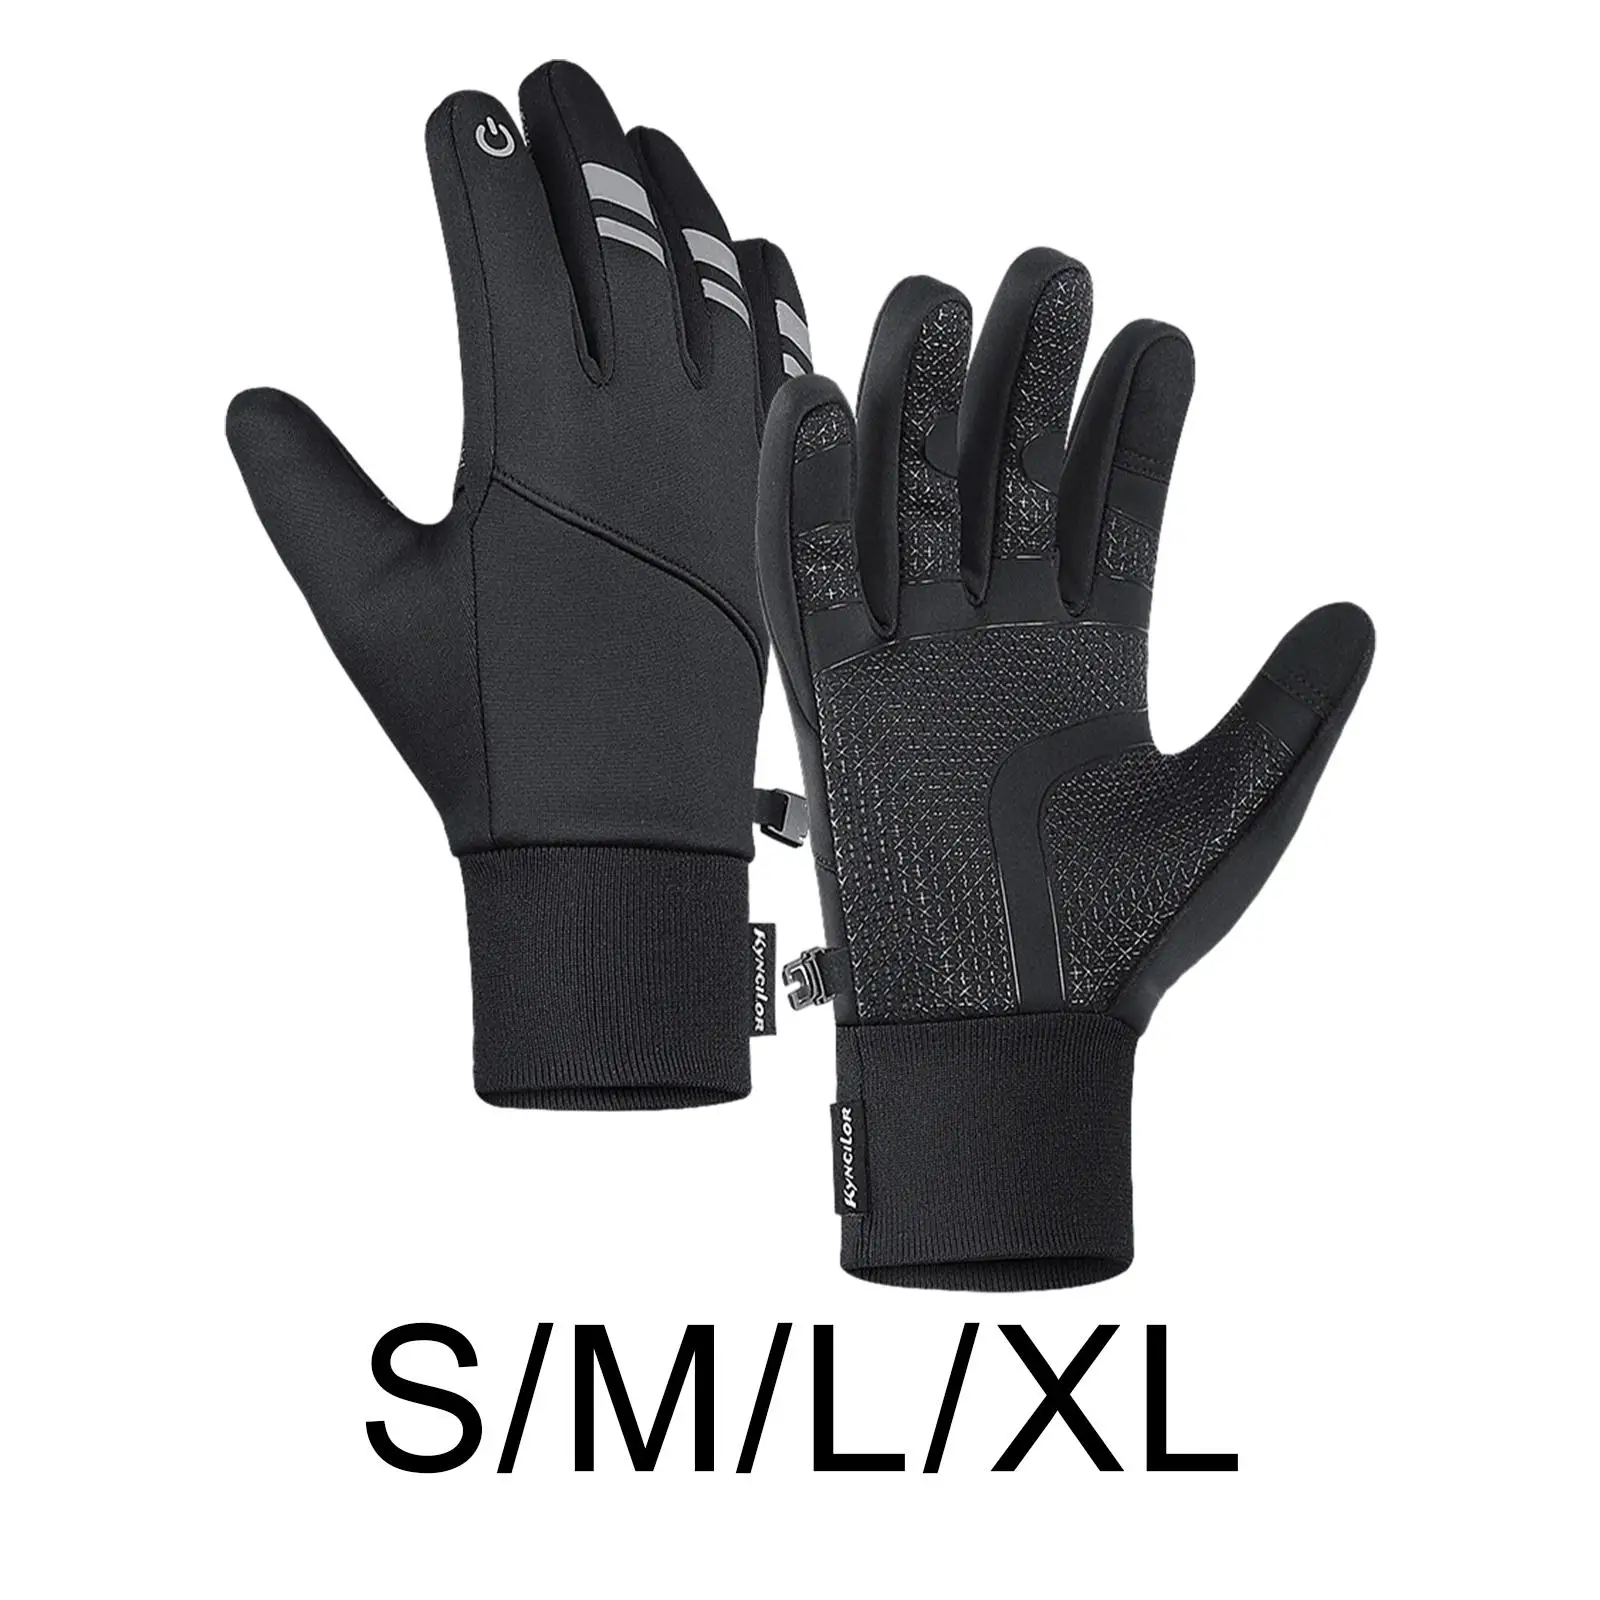 Winter Ski Gloves Touchscreen Waterproof AntiSlip Cycling Gloves Warm Mittens for Running Outdoor Sports Biking Driving Skating